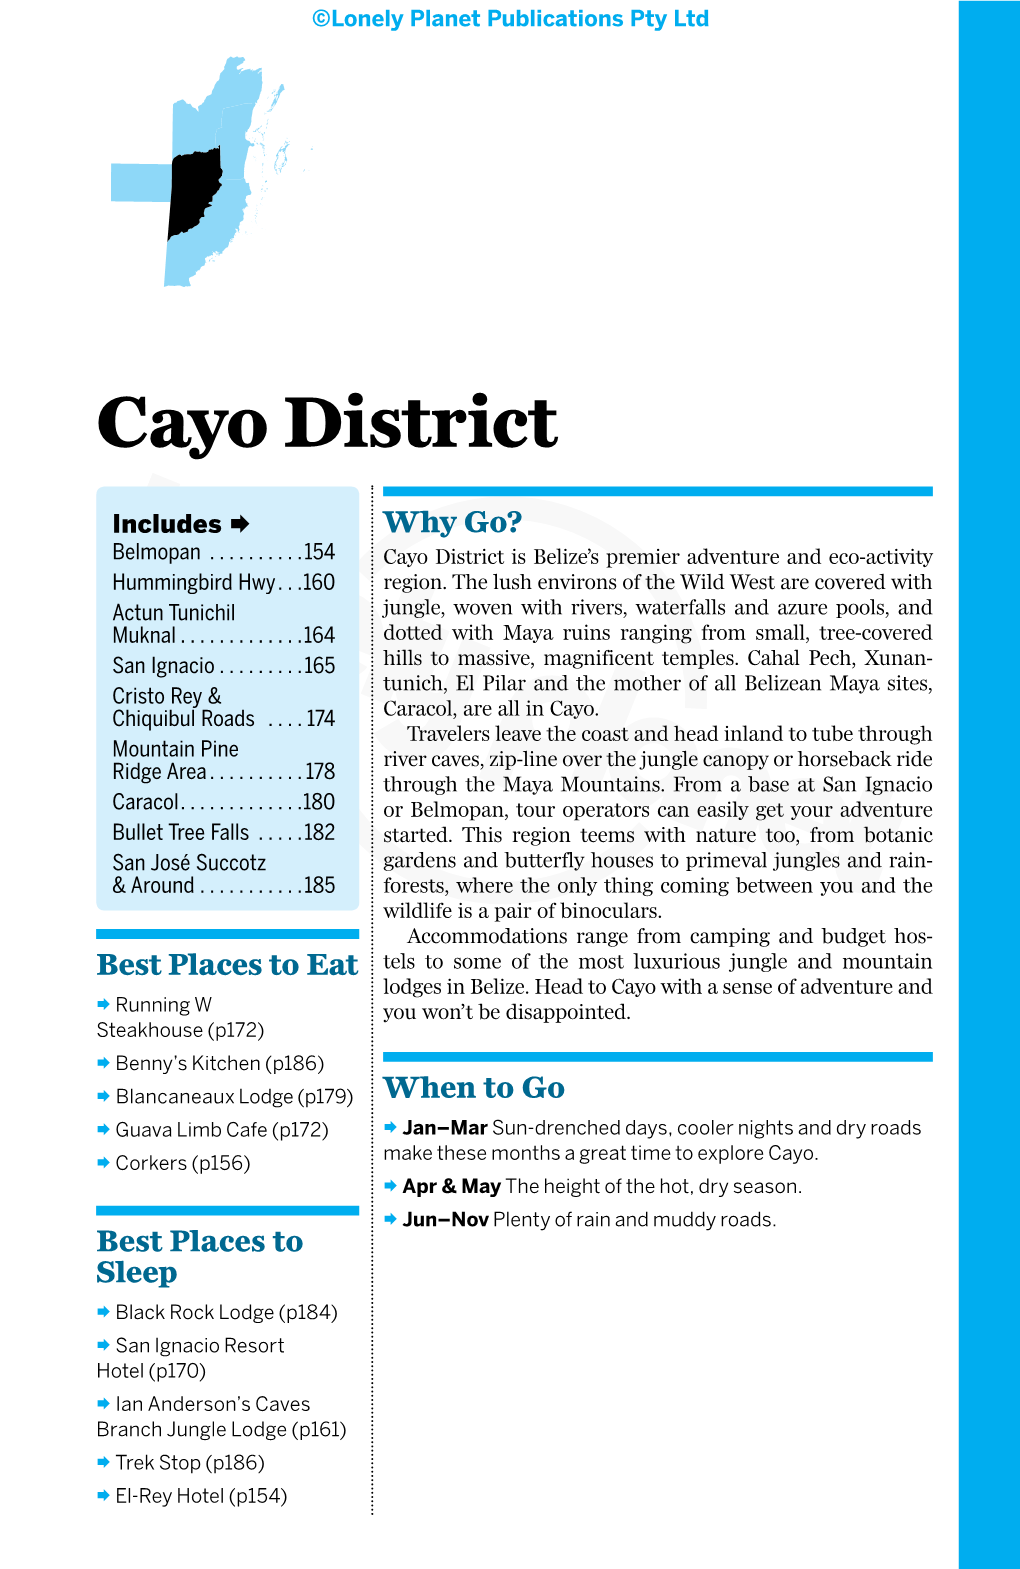 Cayo District